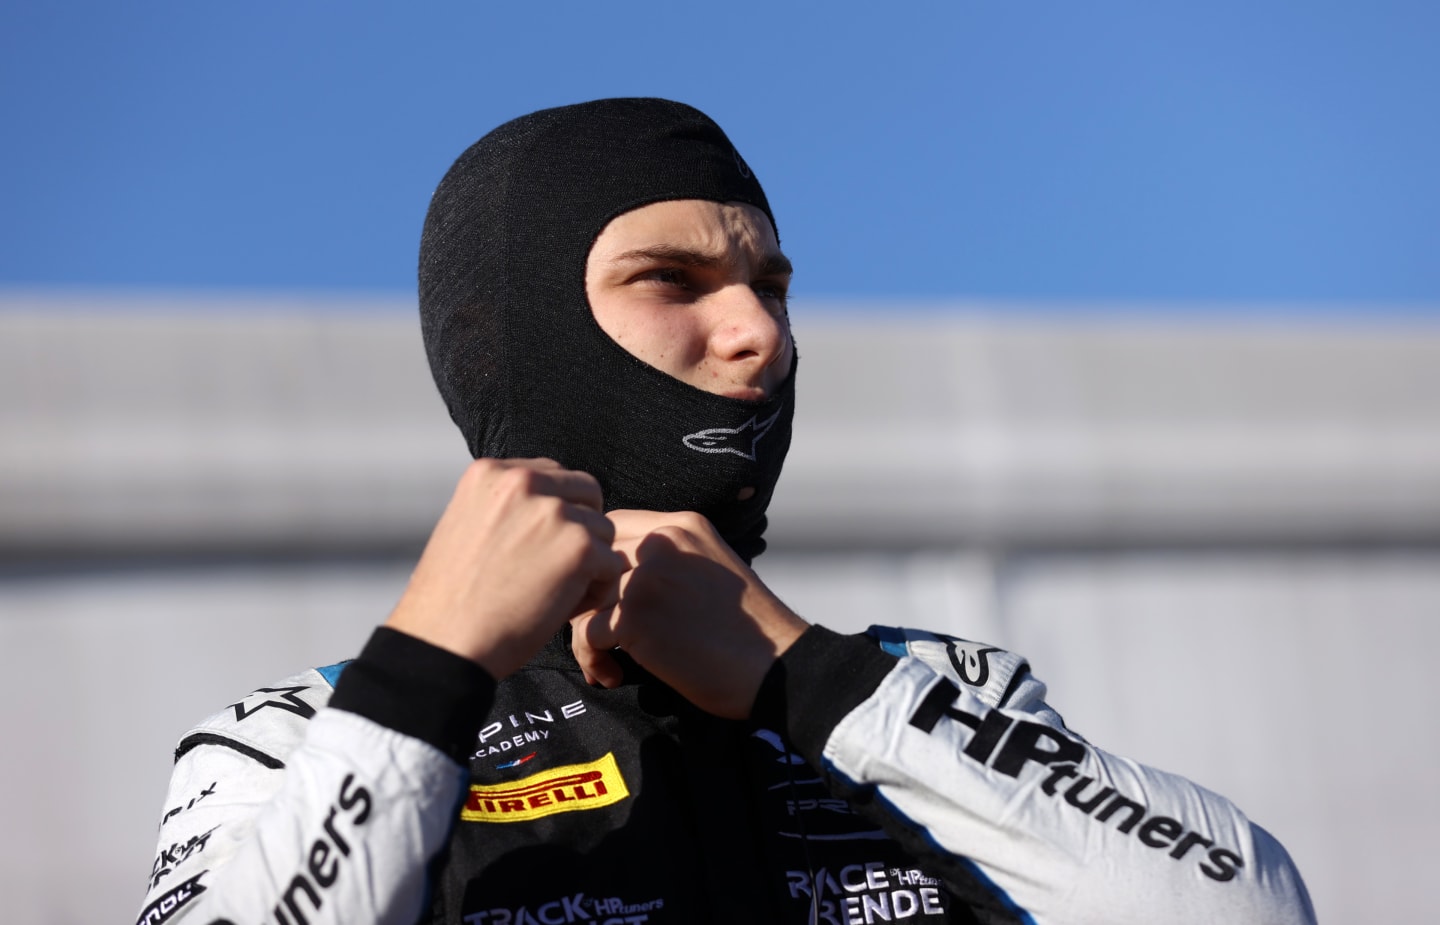 SOCHI, RUSSIA - SEPTEMBER 24: Oscar Piastri of Australia and Prema Racing prepares to drive before